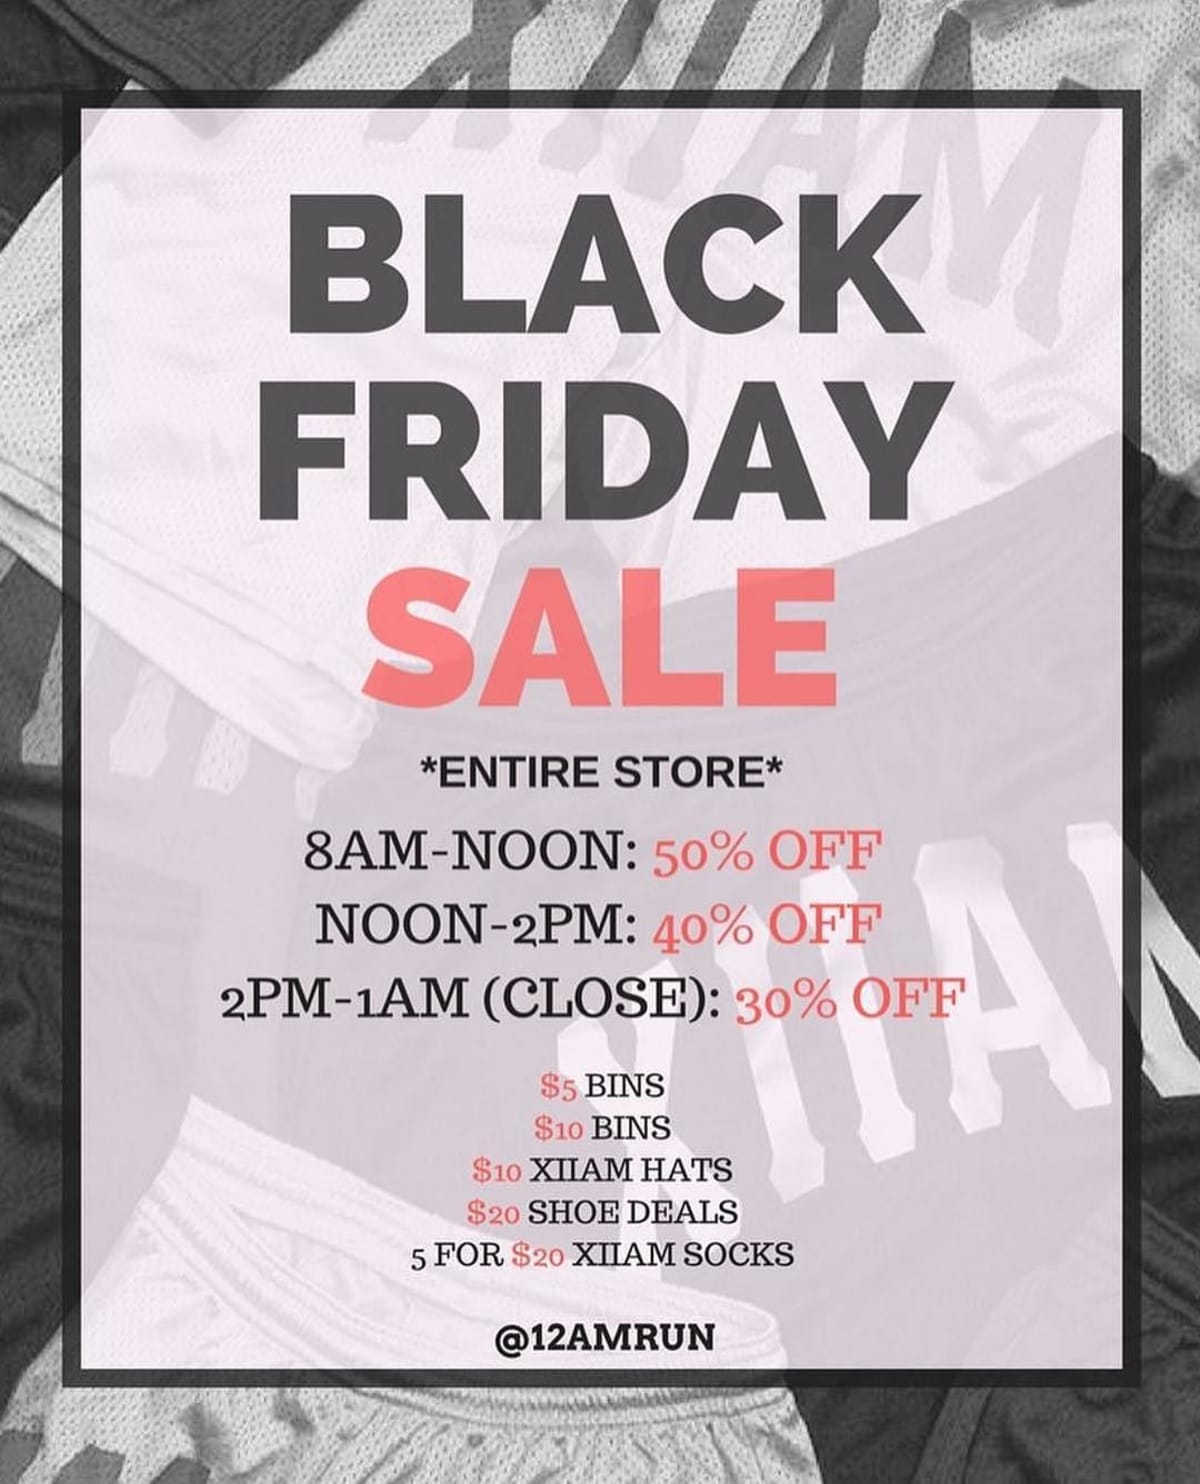 Black Friday Sneaker Sales 2017 12AM Run Black Friday Sneaker Sales